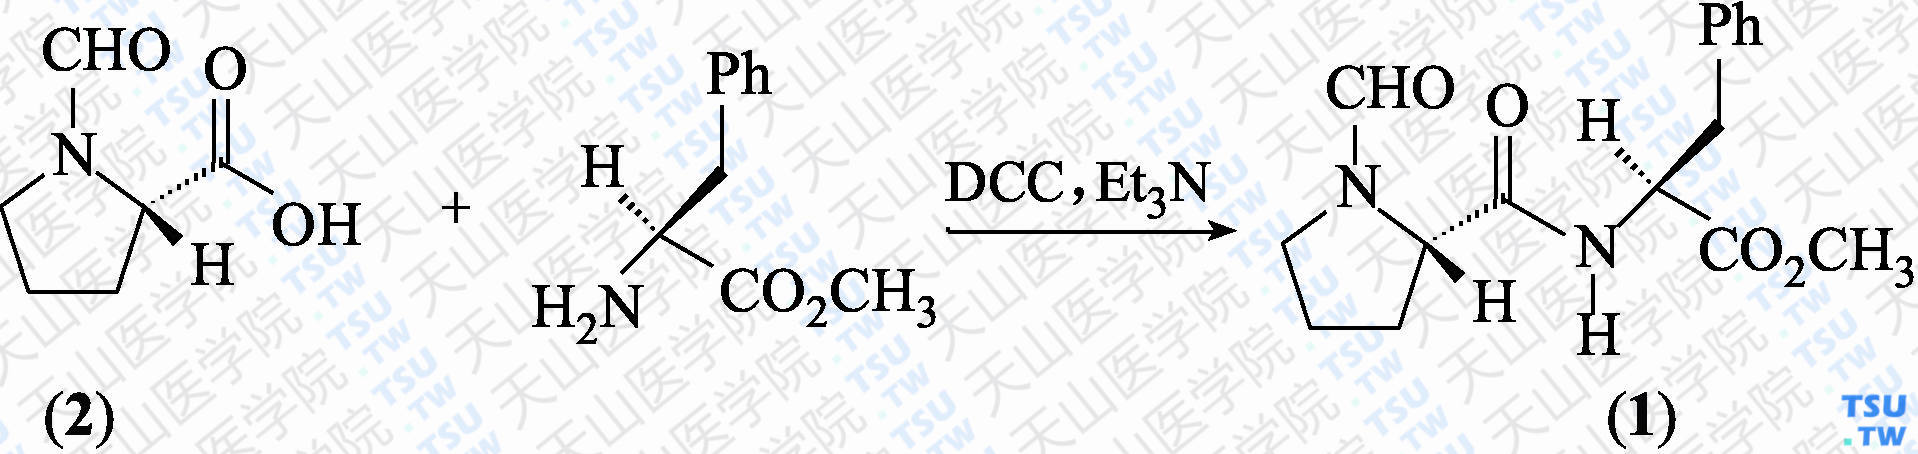 1-甲酰基-L-脯氨酰-L-苯丙氨酸甲酯（分子式：C<sub>16</sub>H<sub>20</sub>N<sub>2</sub>O<sub>4</sub>）的合成方法路线及其结构式